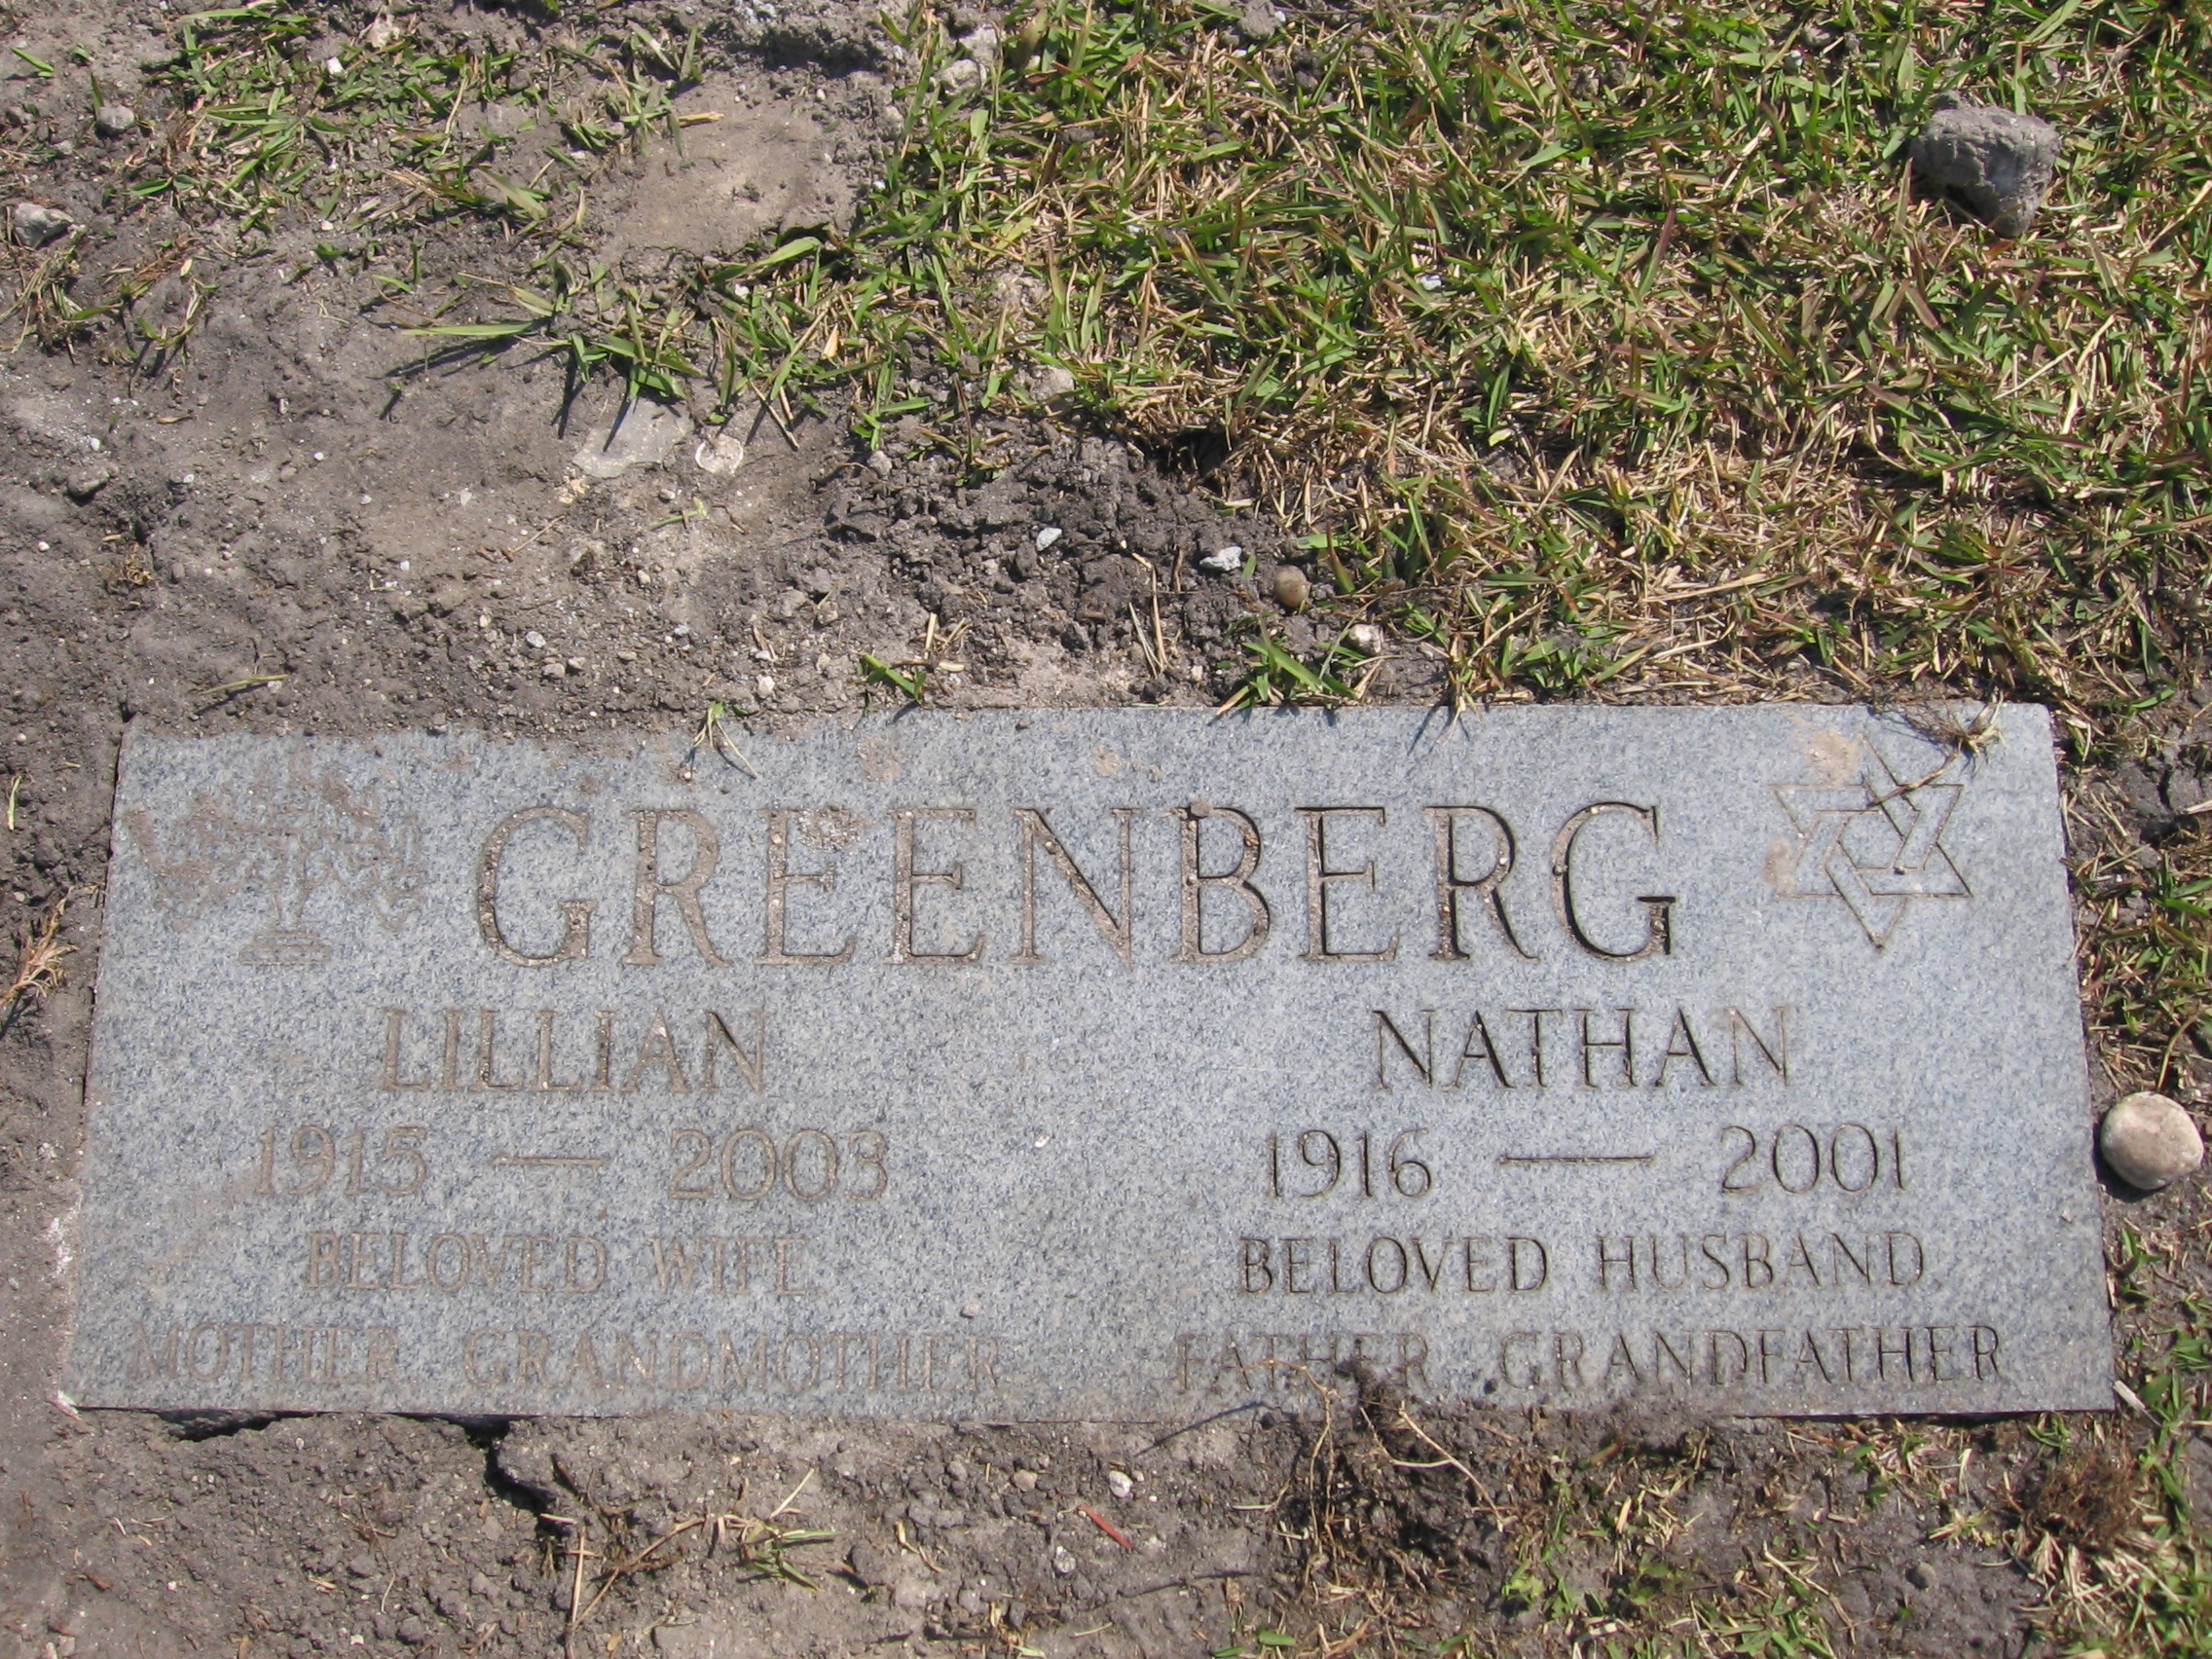 Nathan Greenberg